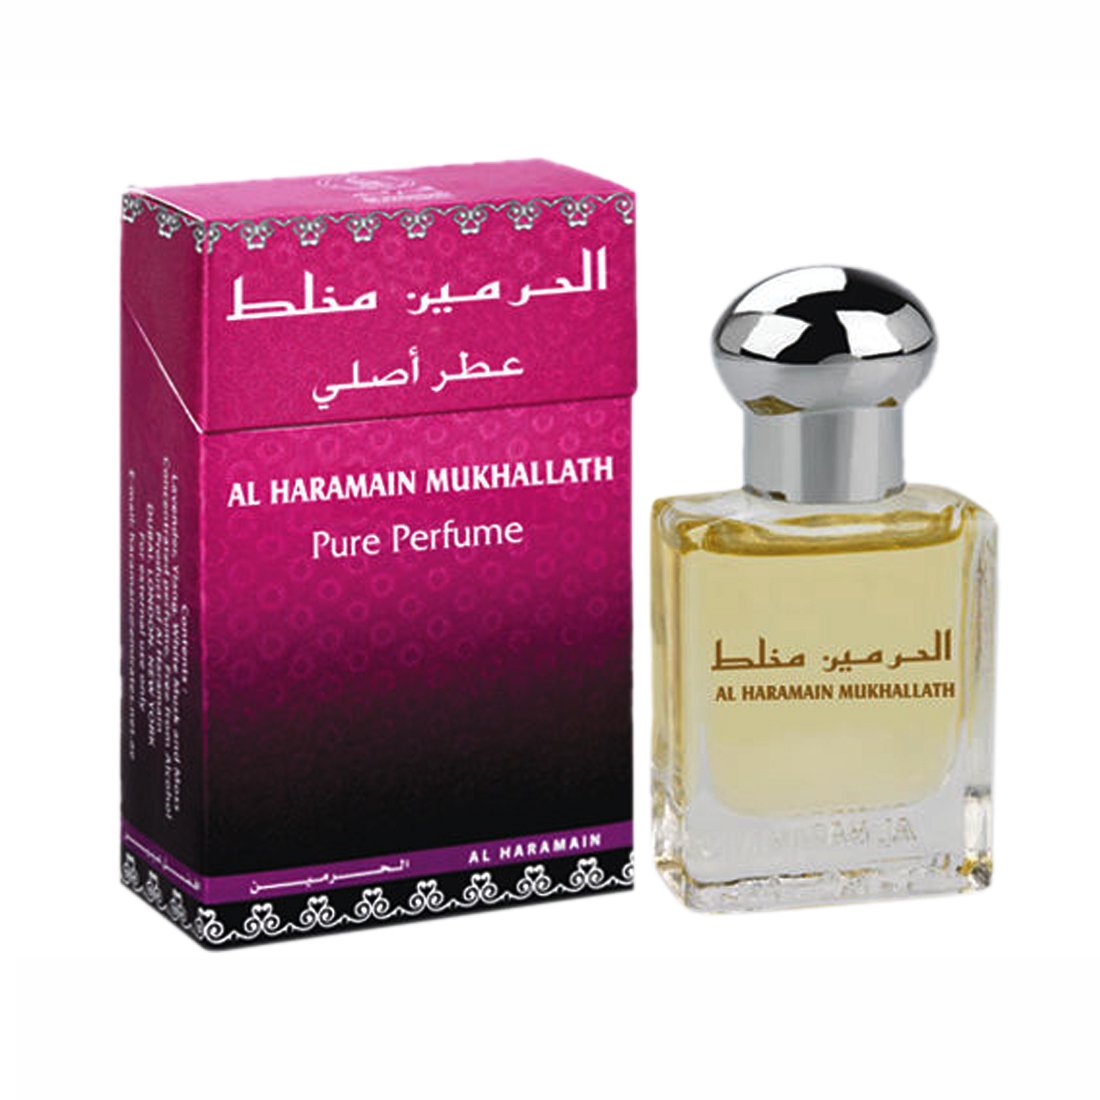 Al Haramain Mukhallath Fragrance Pure Original Roll on Perfume Oil (Attar) - 15 ml